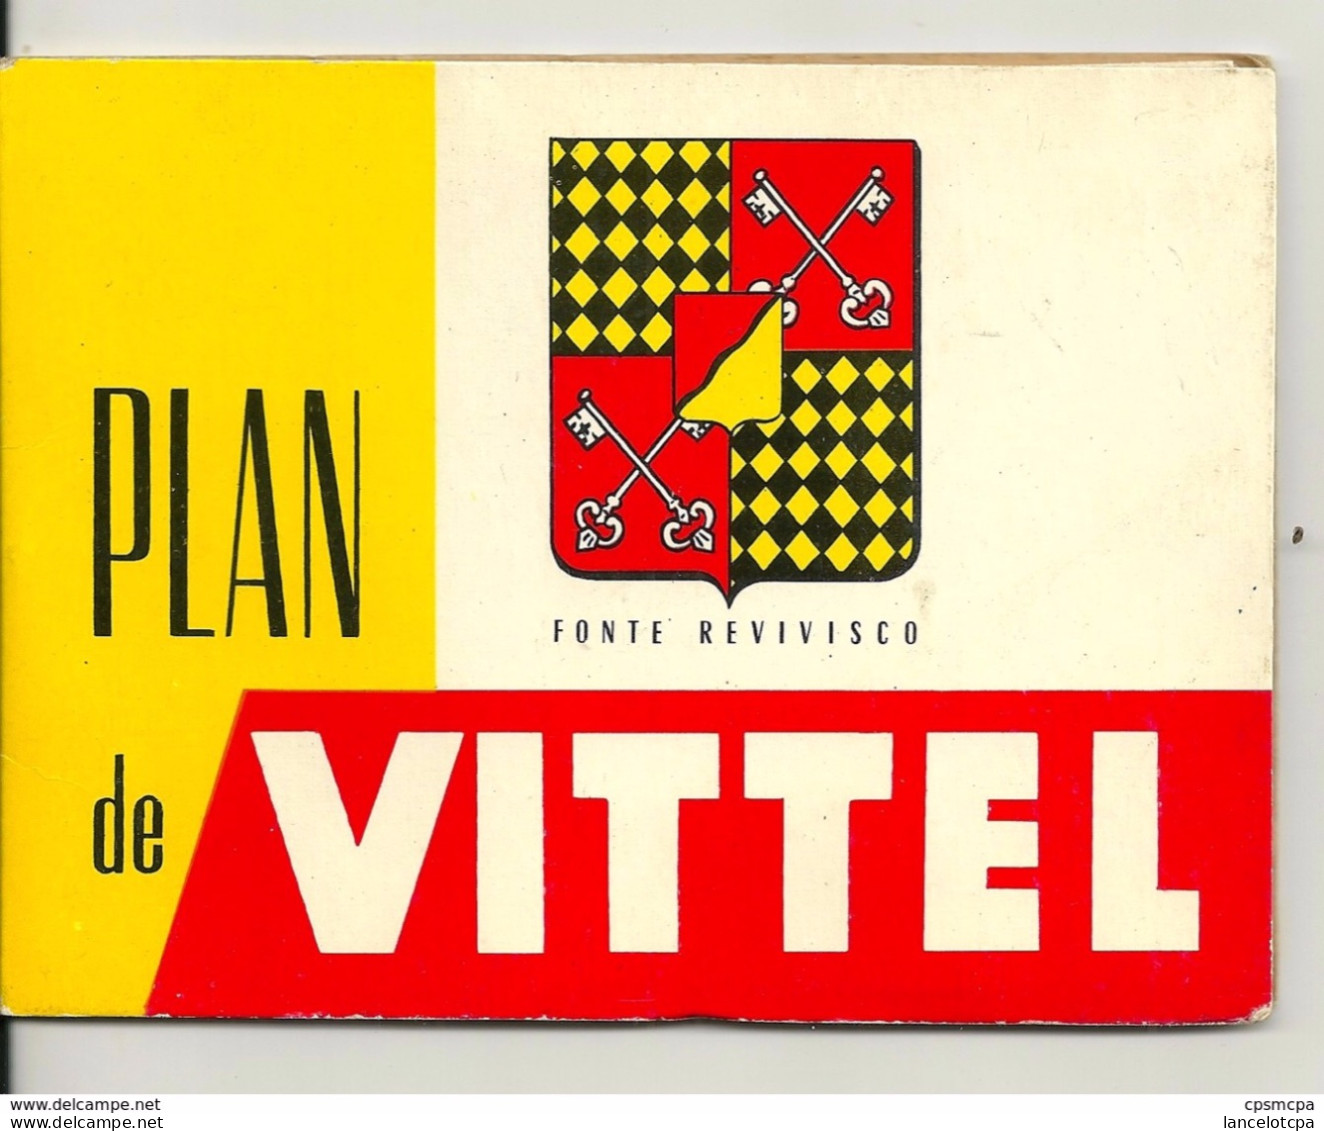 88 - VITTEL / PLAN ANCIEN DE LA VILLE - Otros Planes